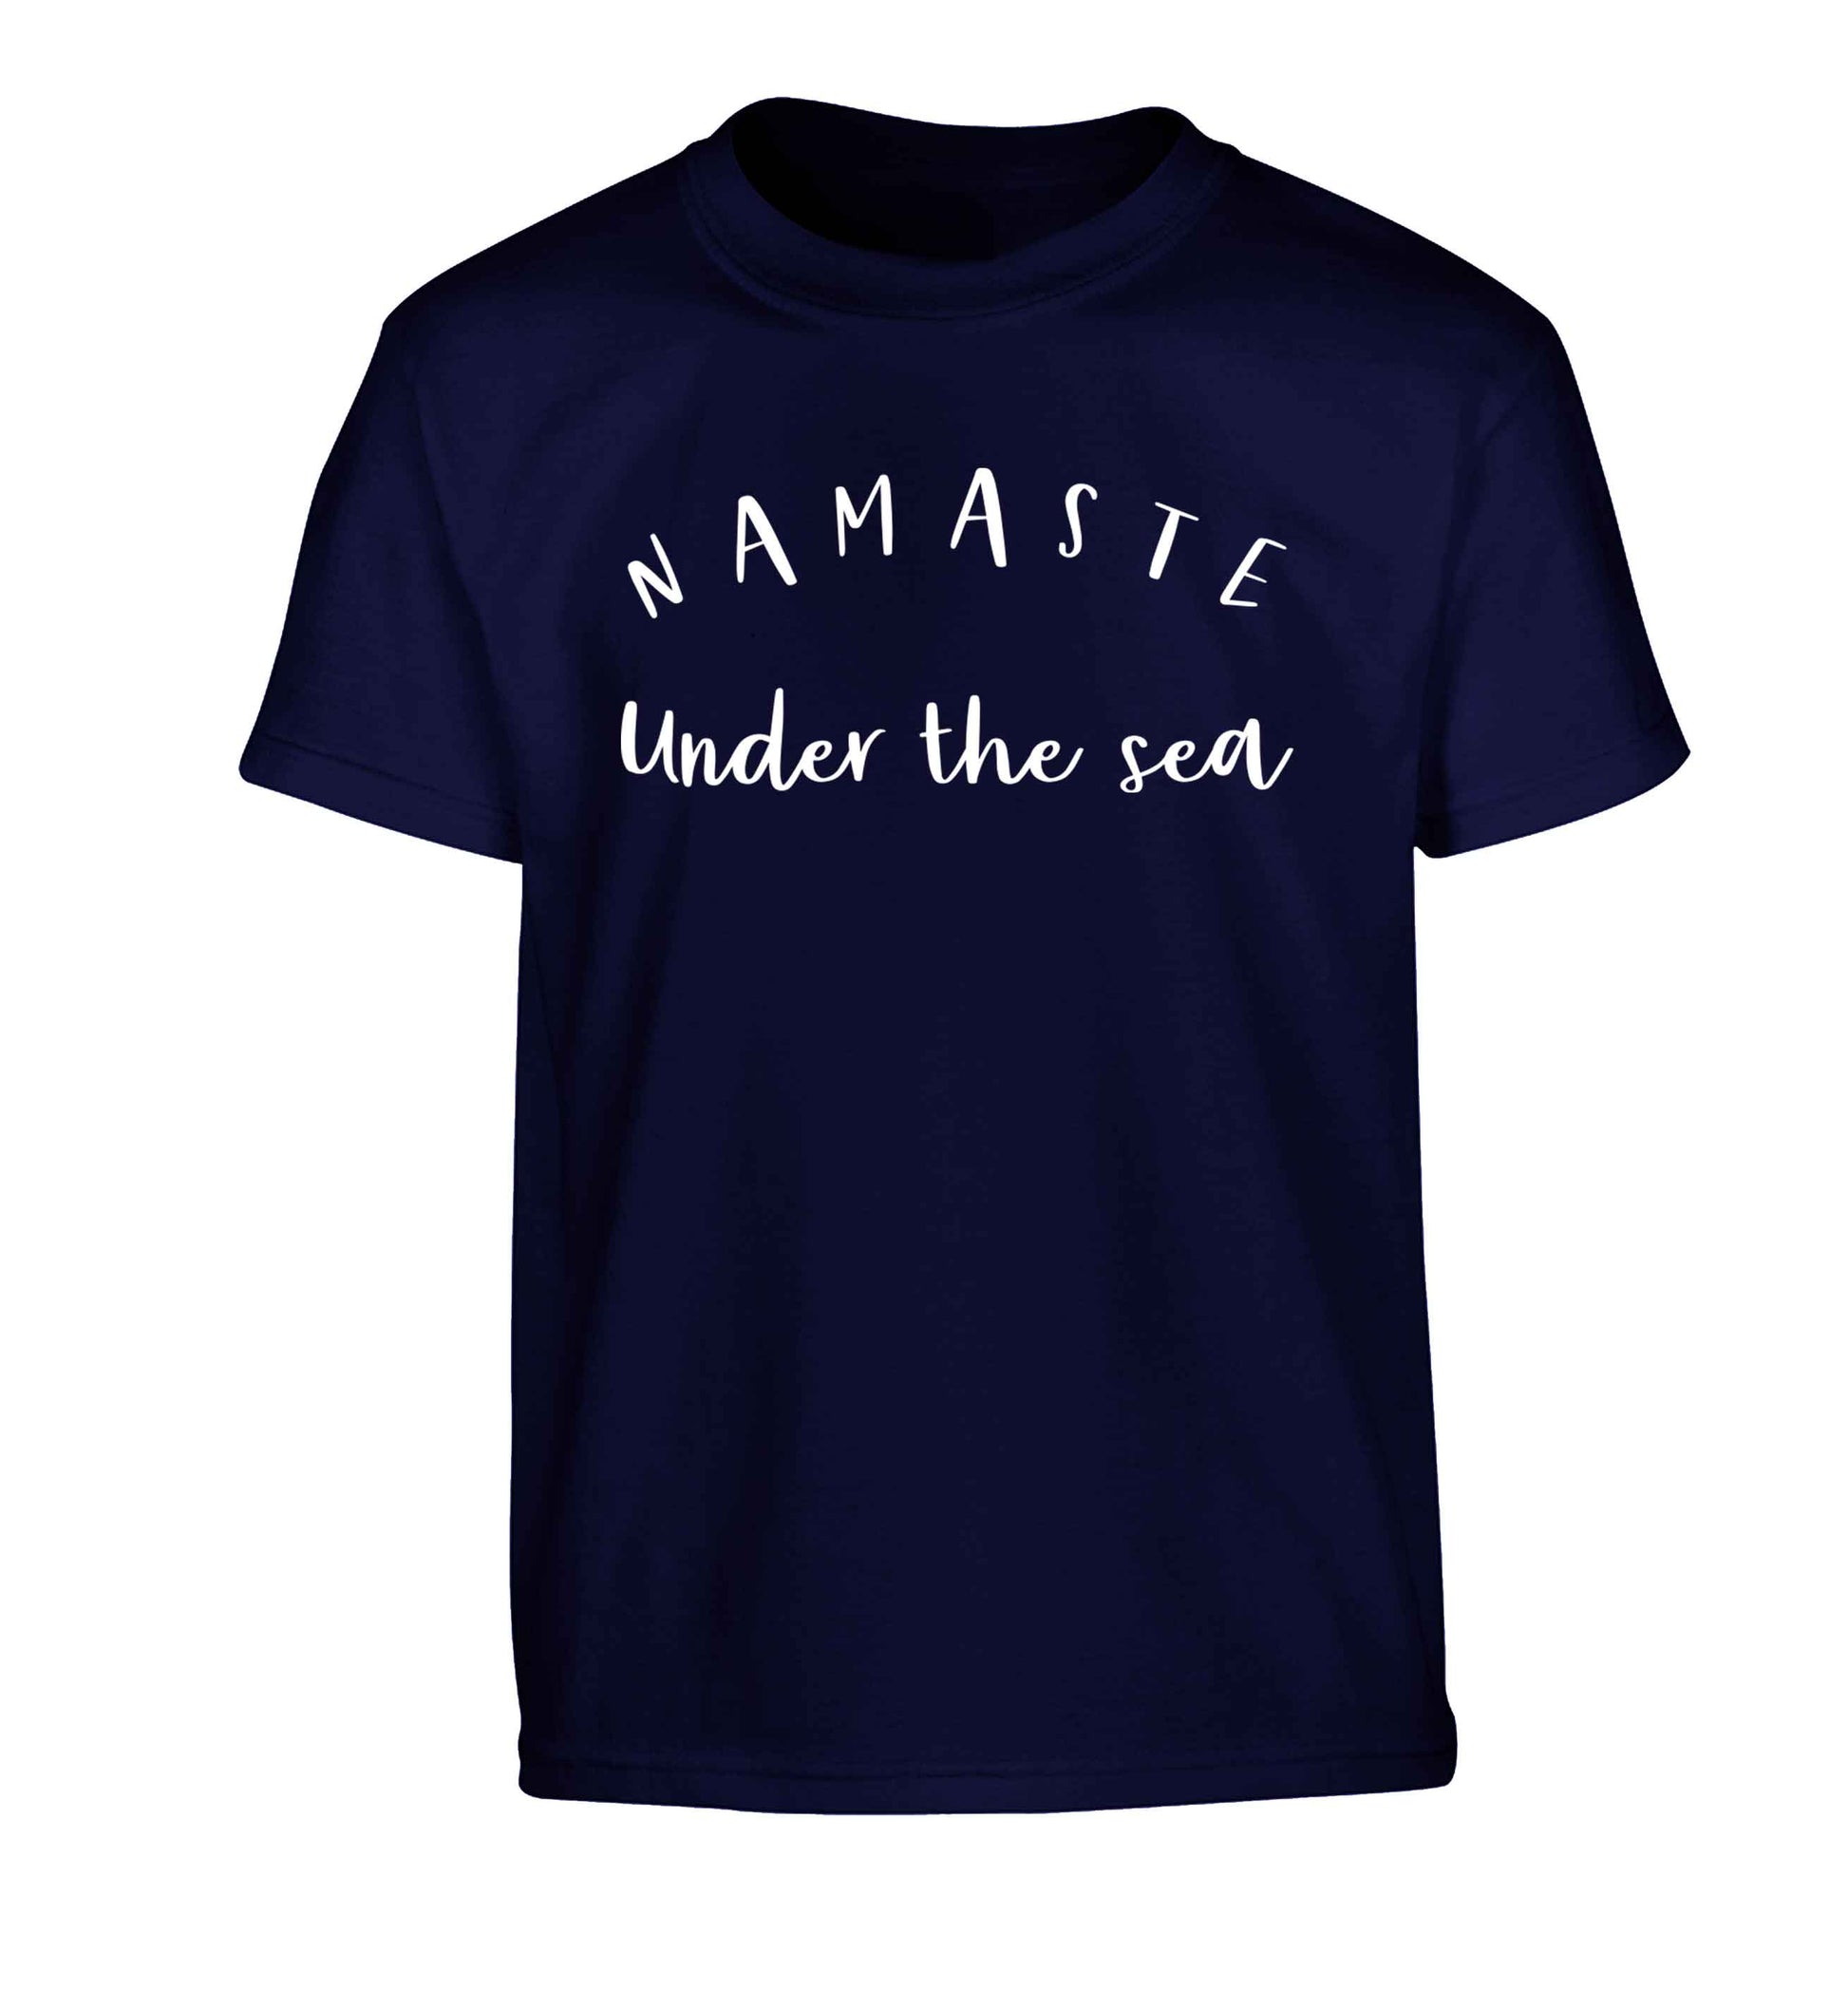 Namaste under the water Children's navy Tshirt 12-13 Years